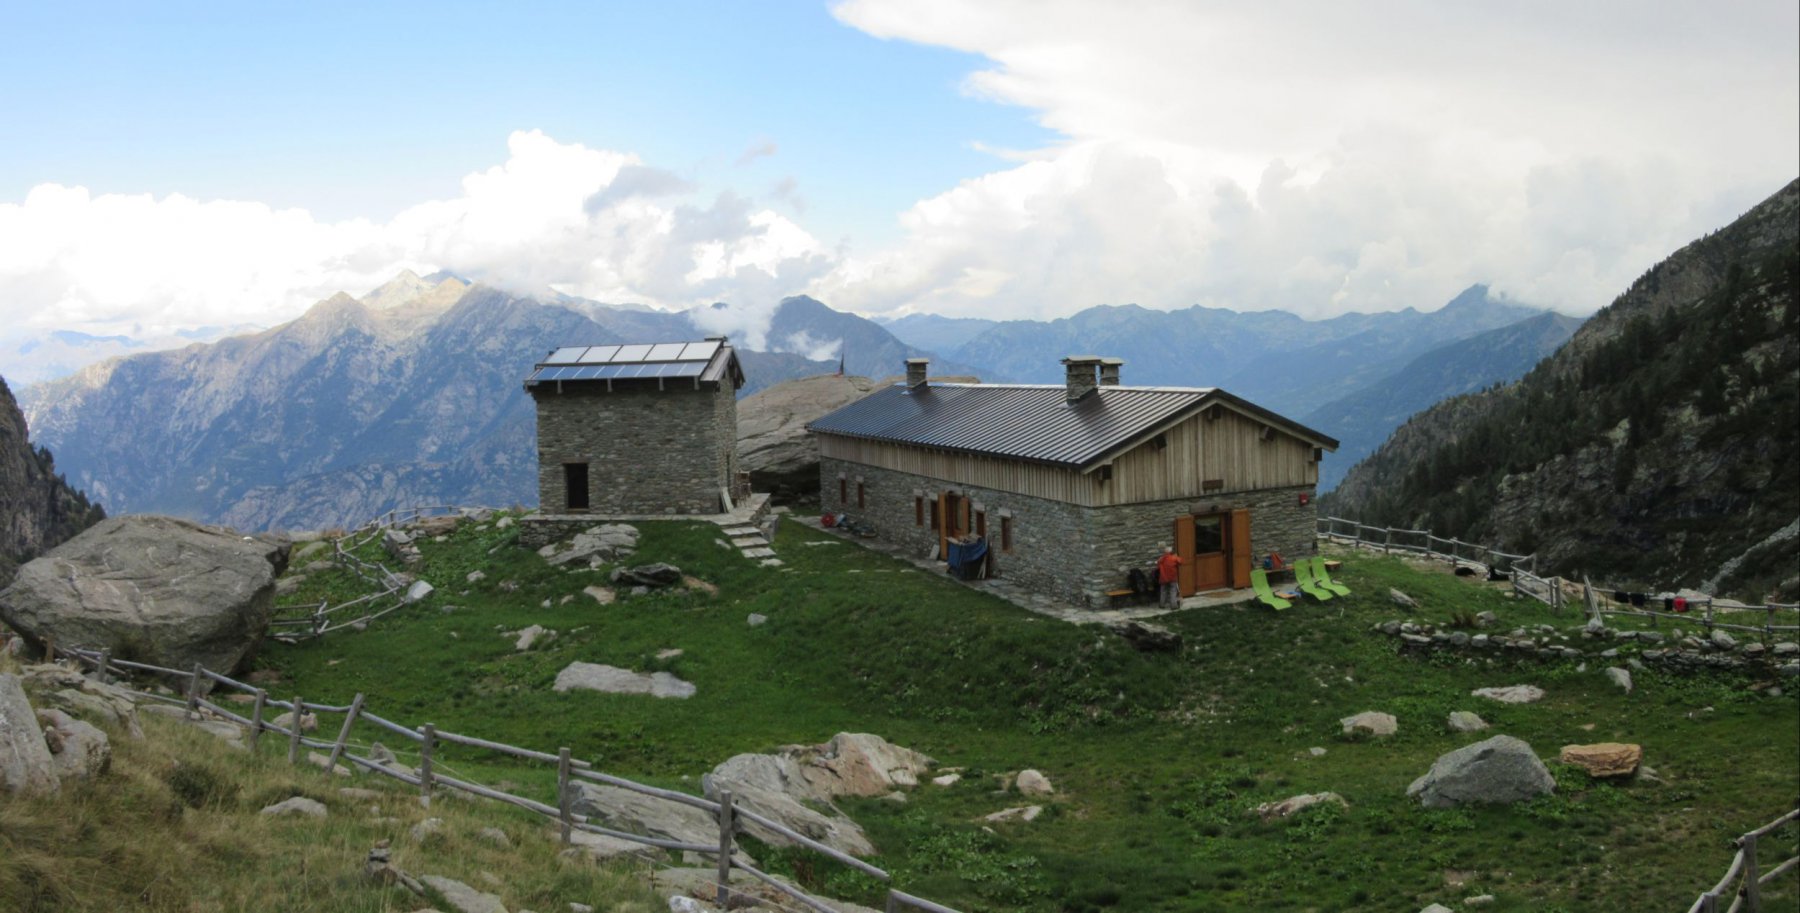 Rifugio Alpe Bonze